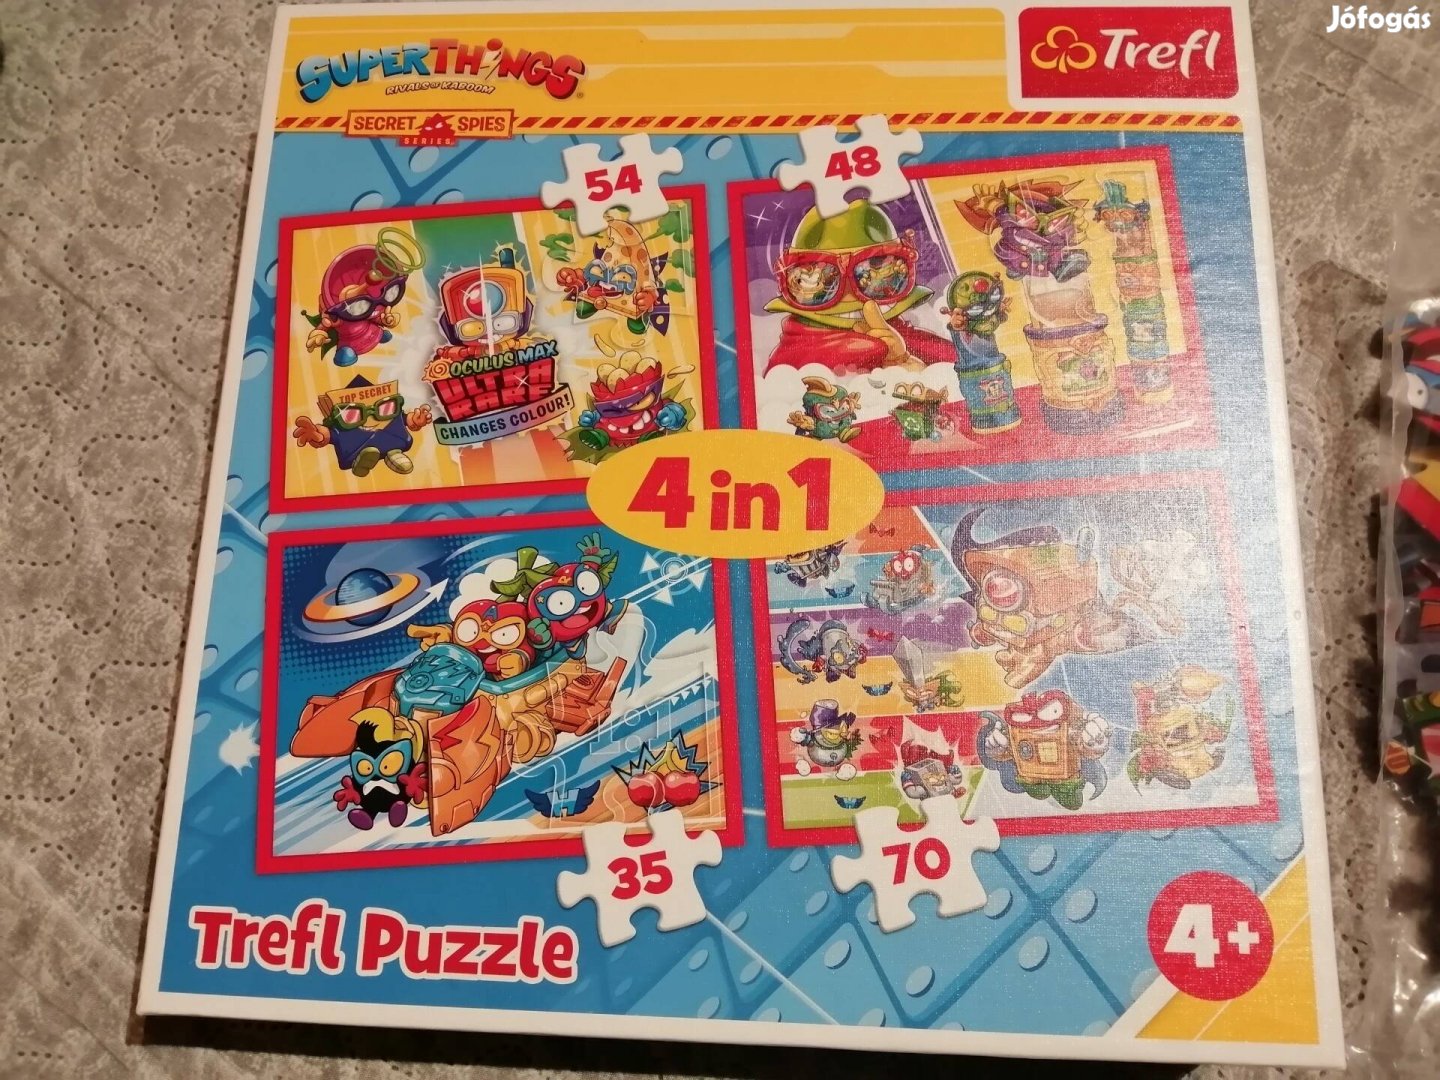 Új Super Things Trefl puzzle 4 in 1